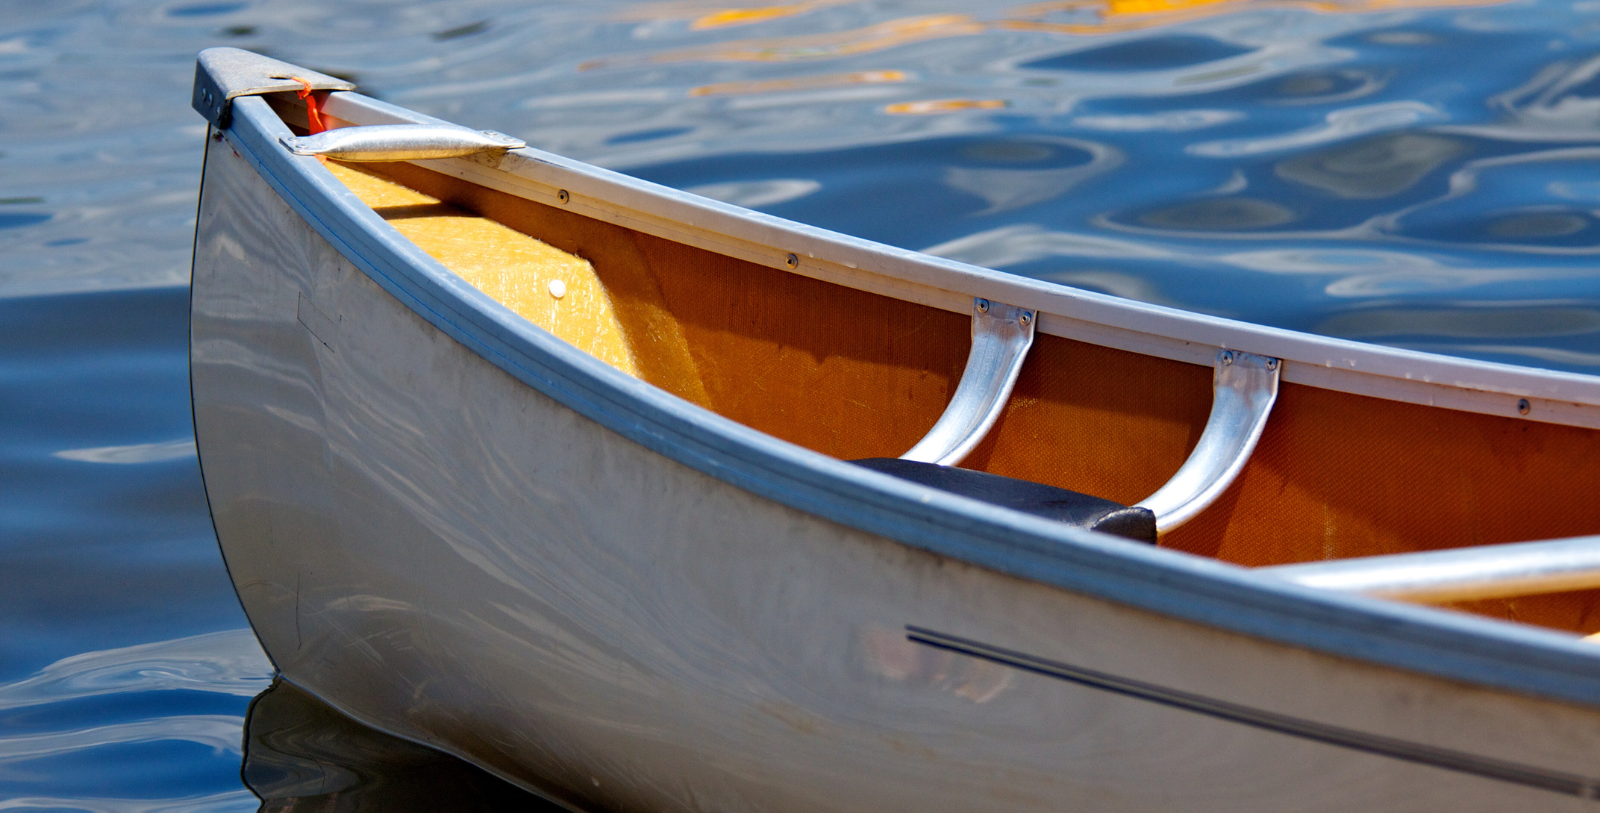 Experience breathtaking on-the-water vistas when canoeing or kayaking around pastoral Oquaga Lake.